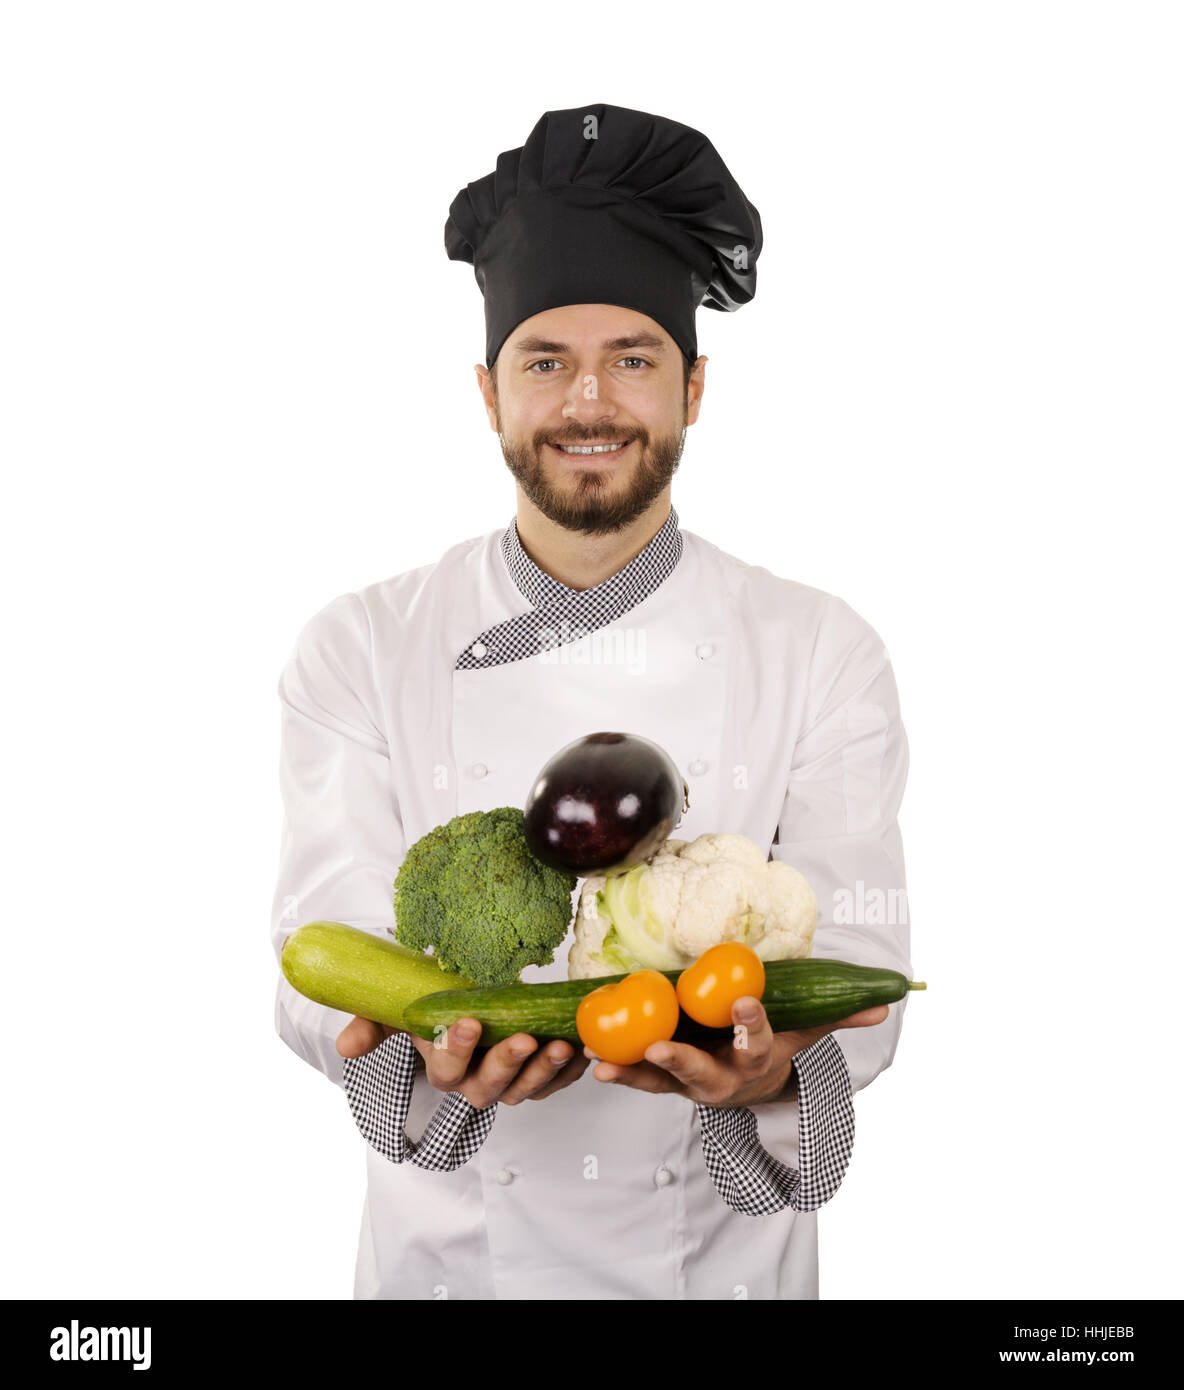 Smiling chef avec des légumes en mains isolated on white Banque D'Images